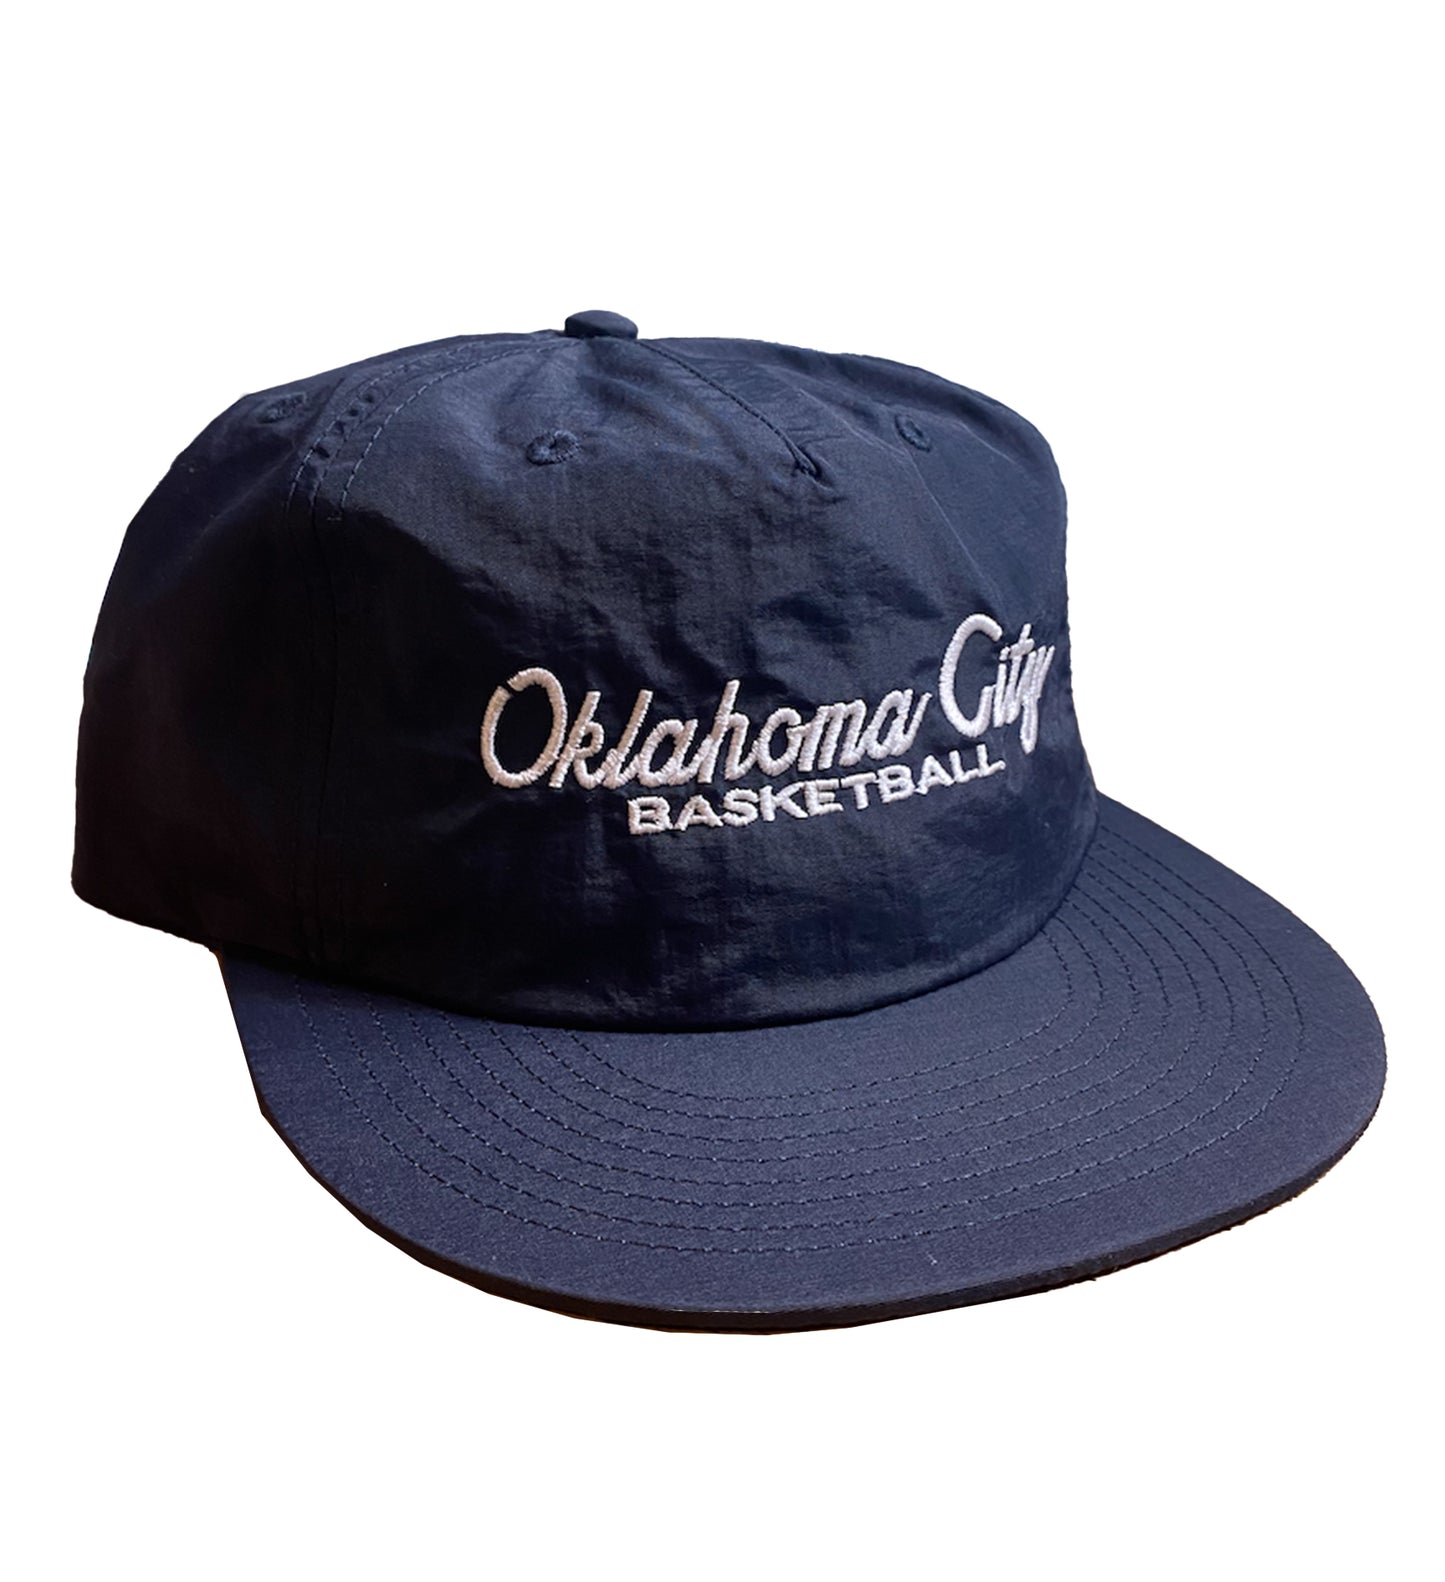 Oklahoma City Basketball Black Cap